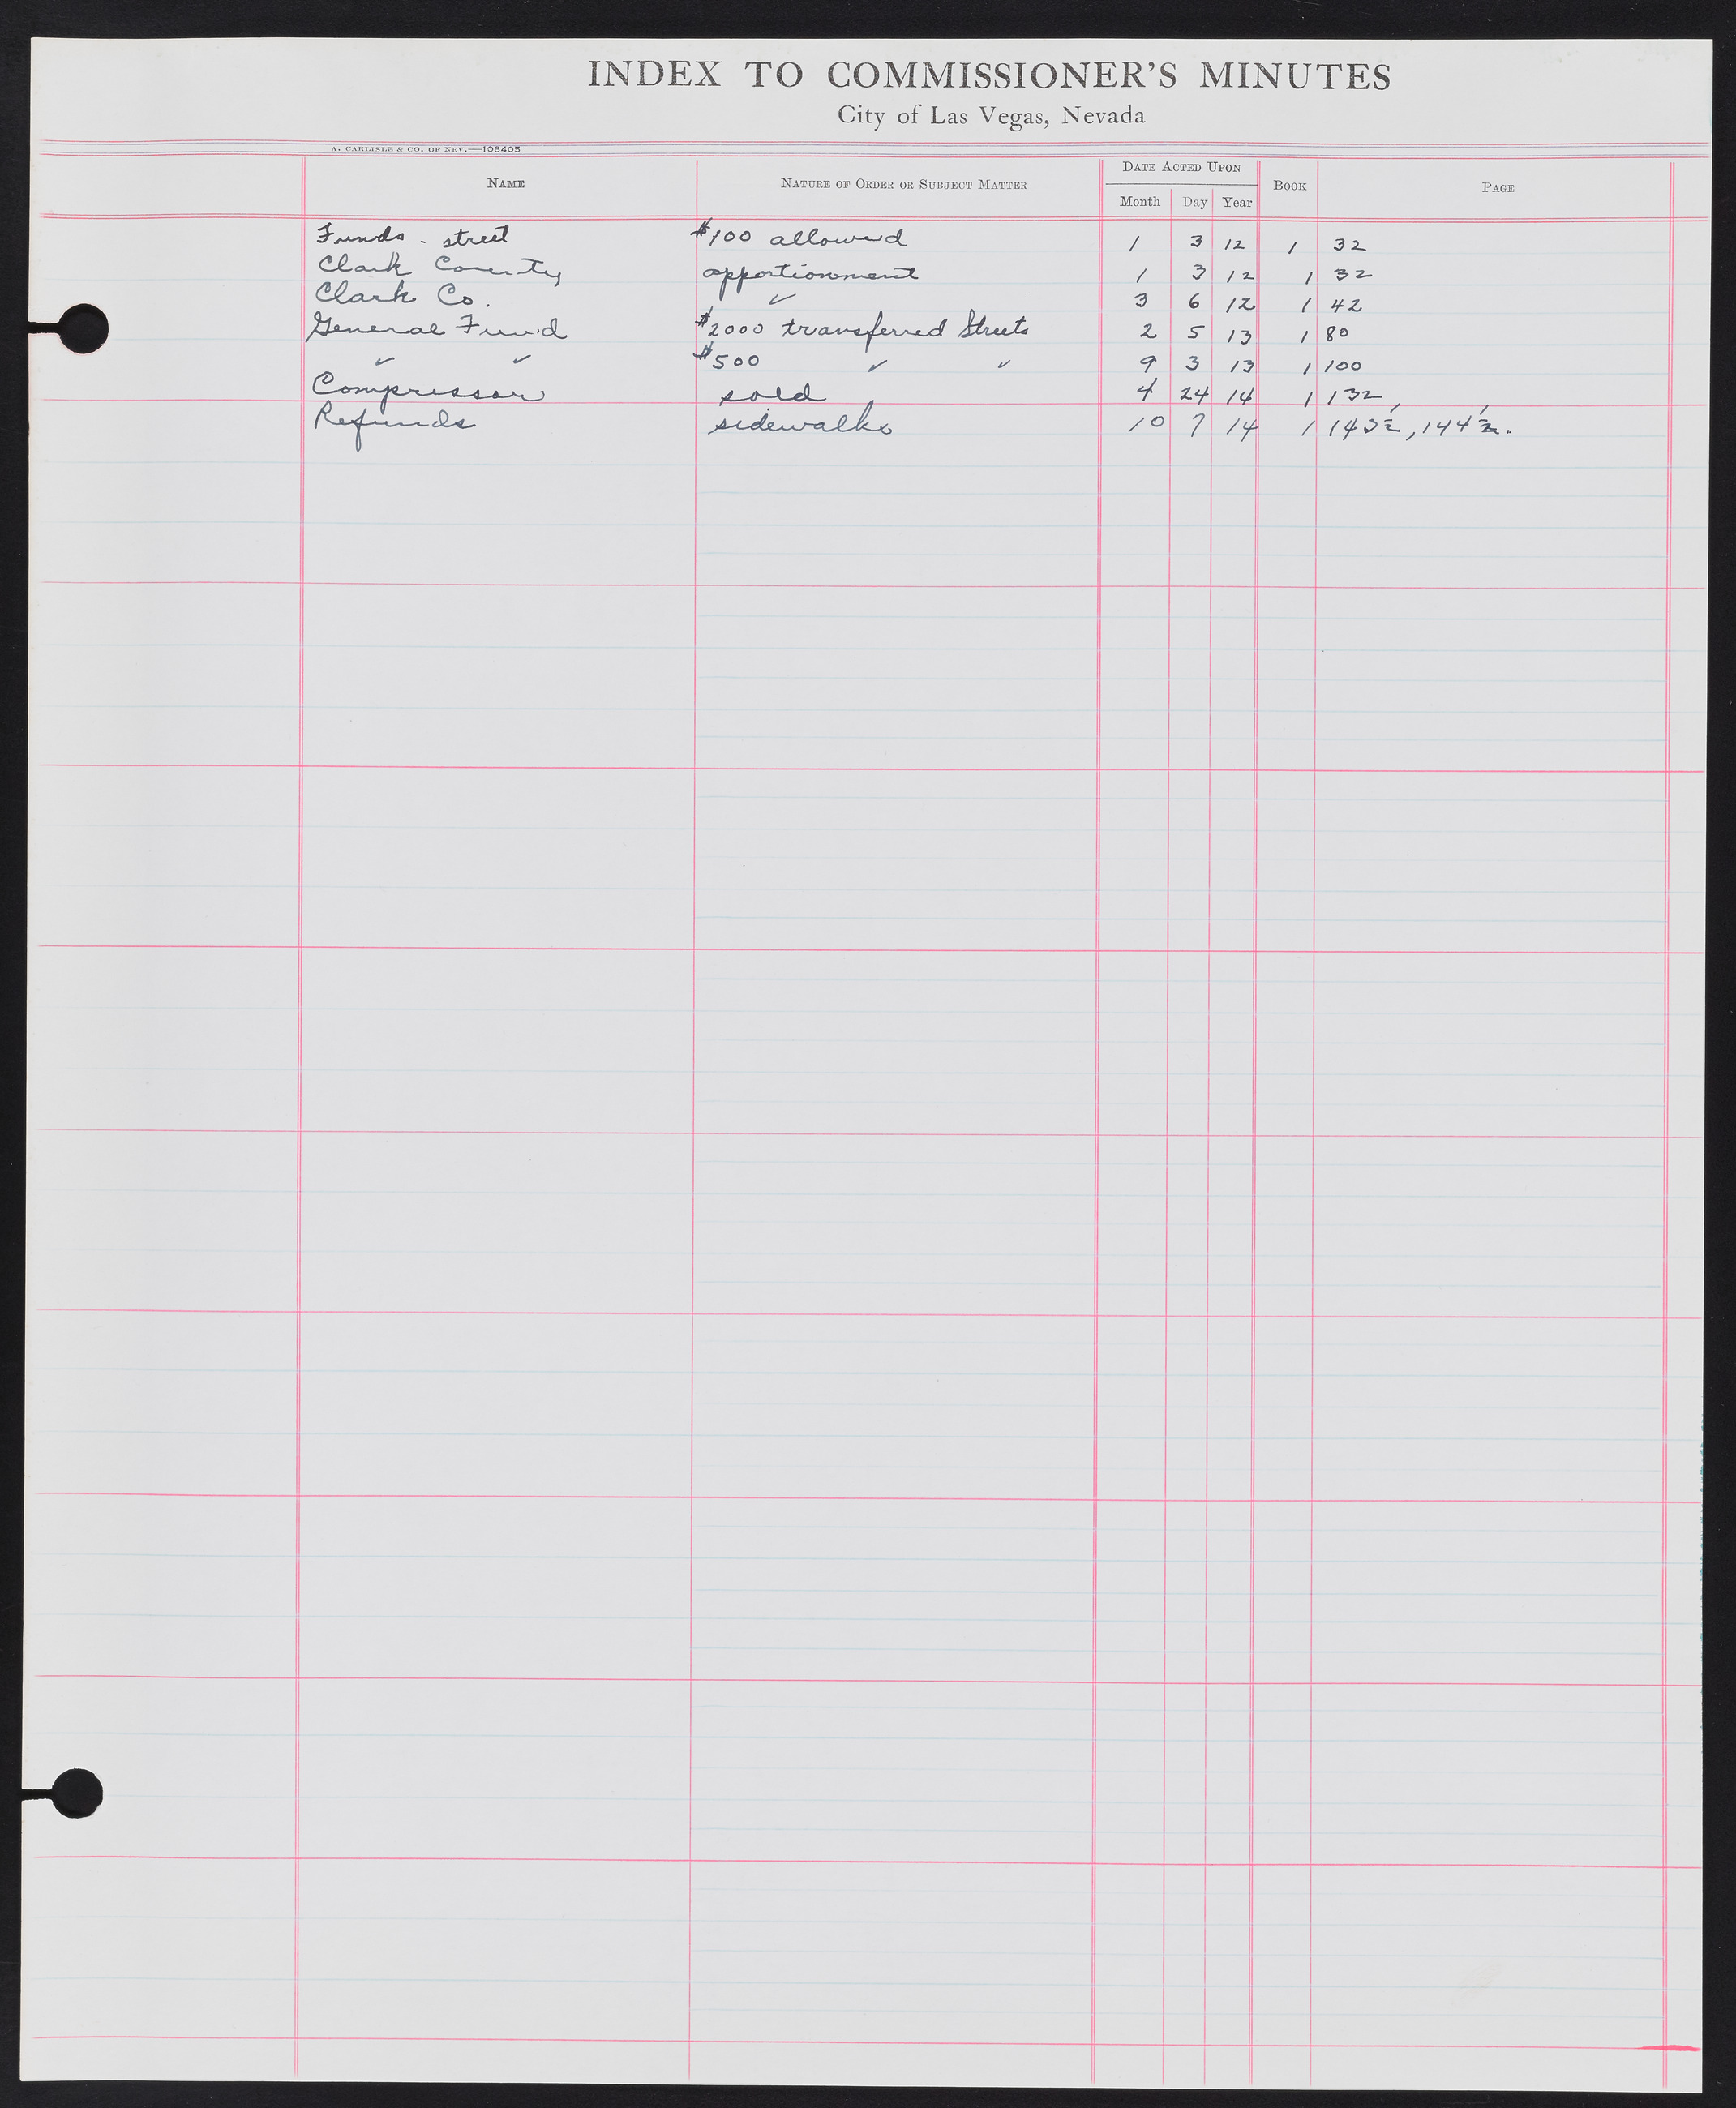 Las Vegas City Commission Minutes Index 1, 1911-1960: documents, item 273